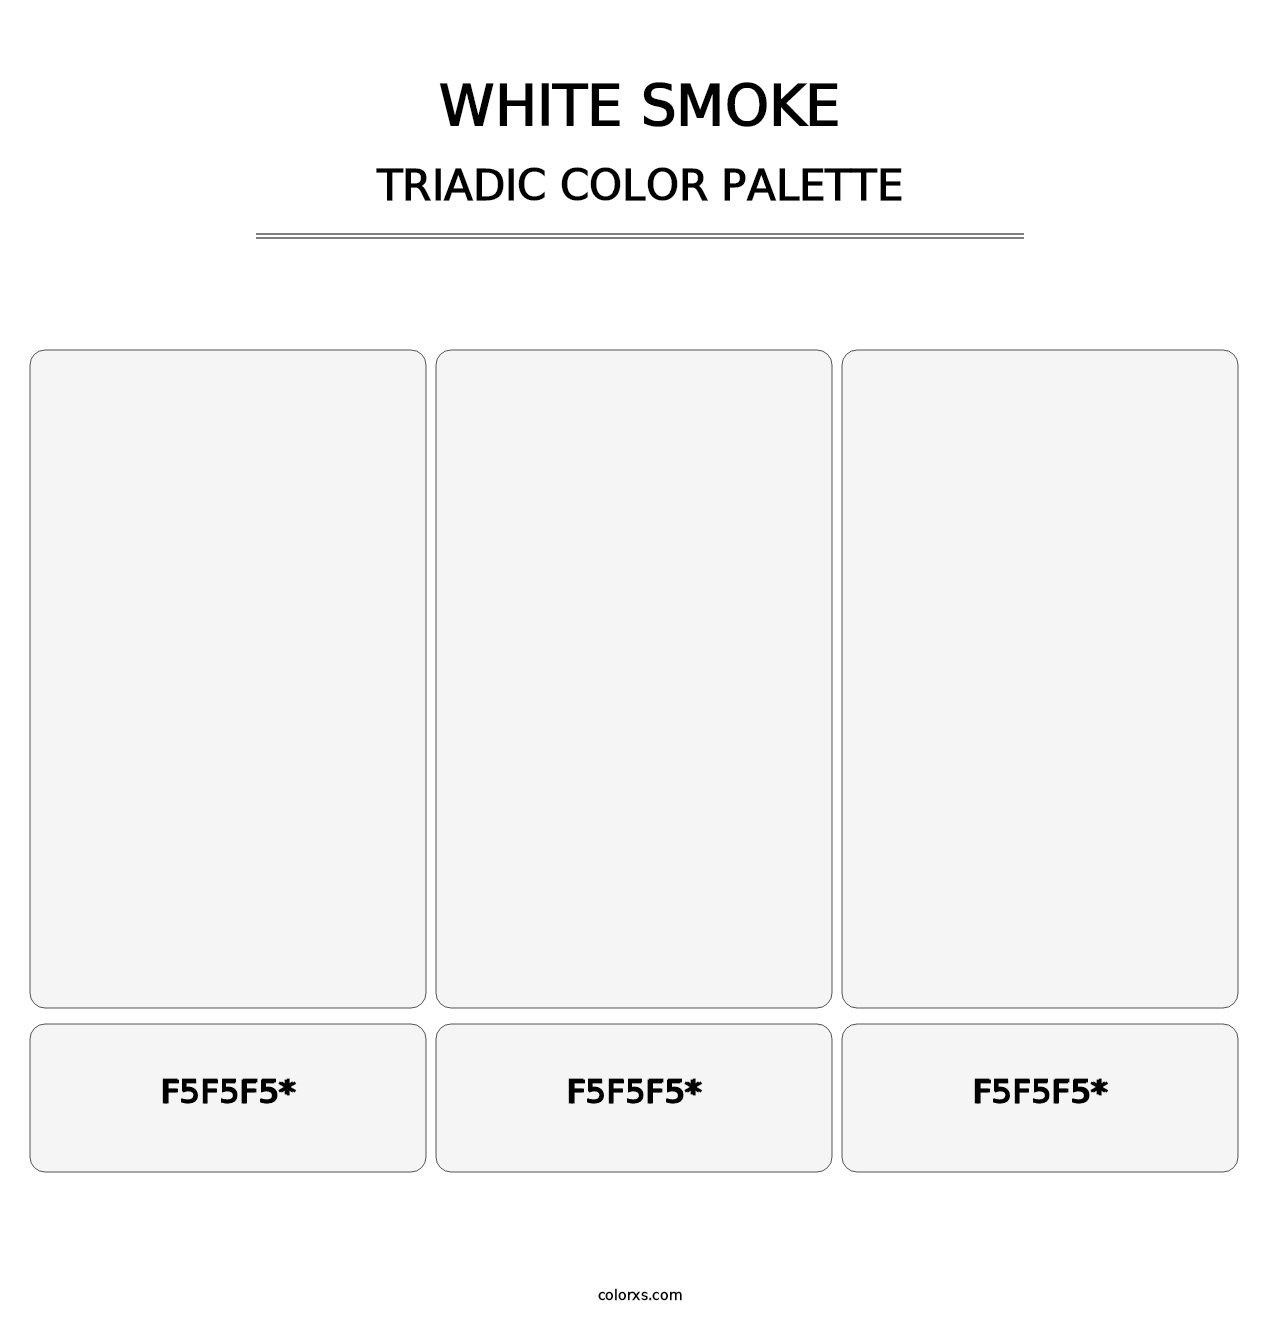 White Smoke - Triadic Color Palette